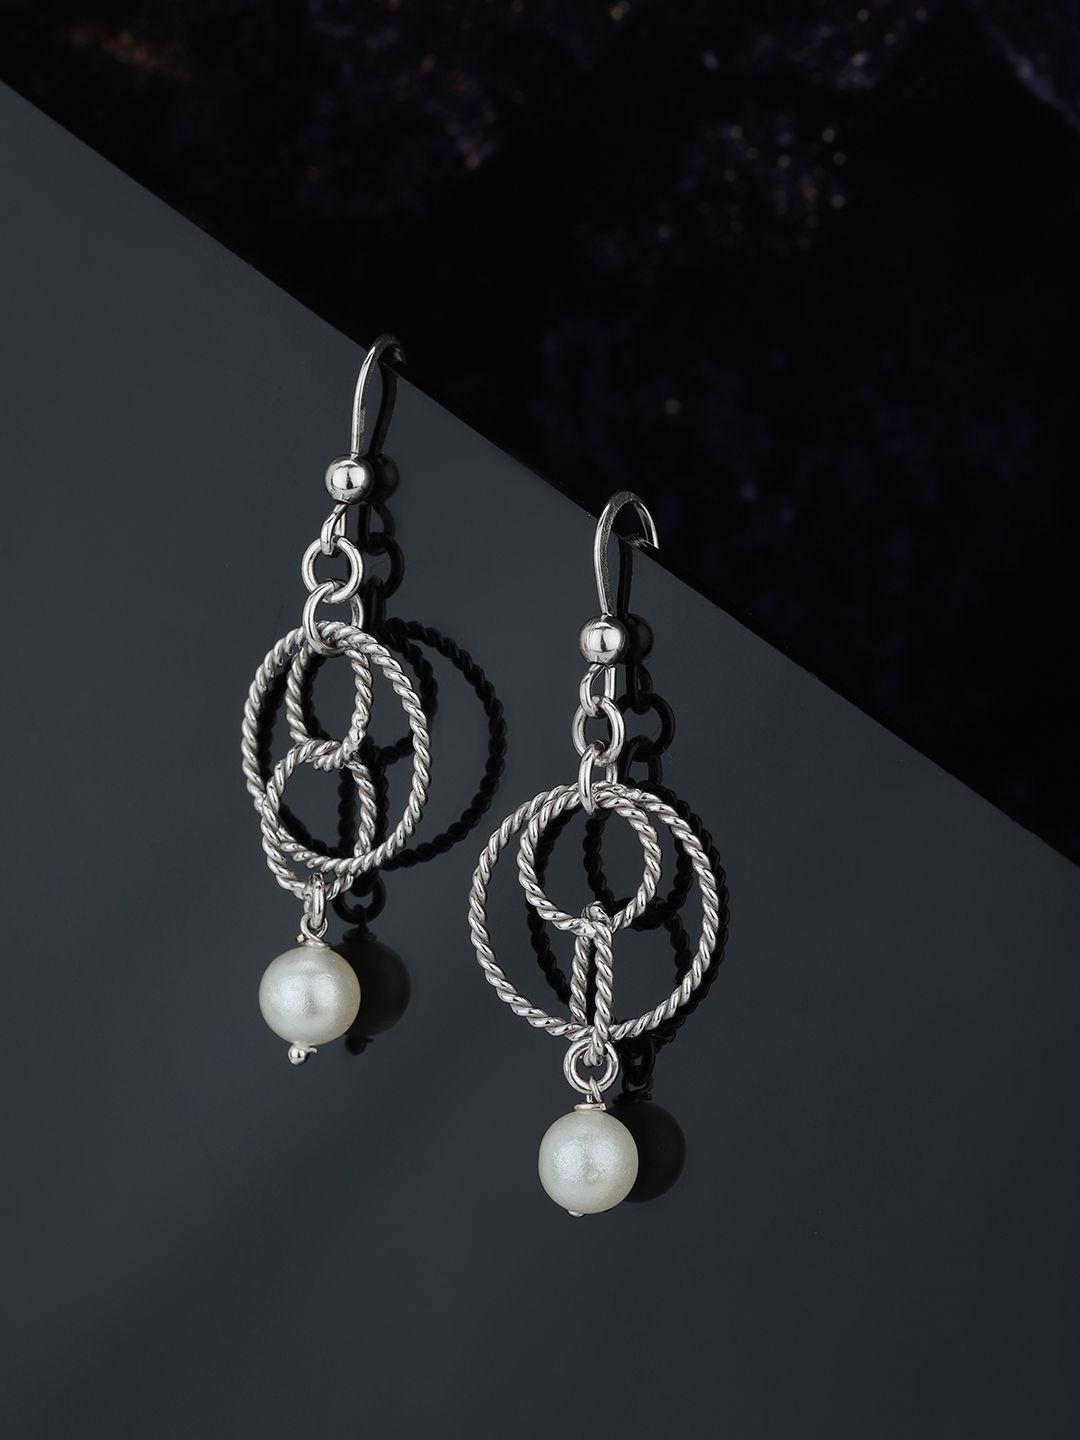 carlton london silver-toned & off-white rhodium-plated beaded circular drop earrings